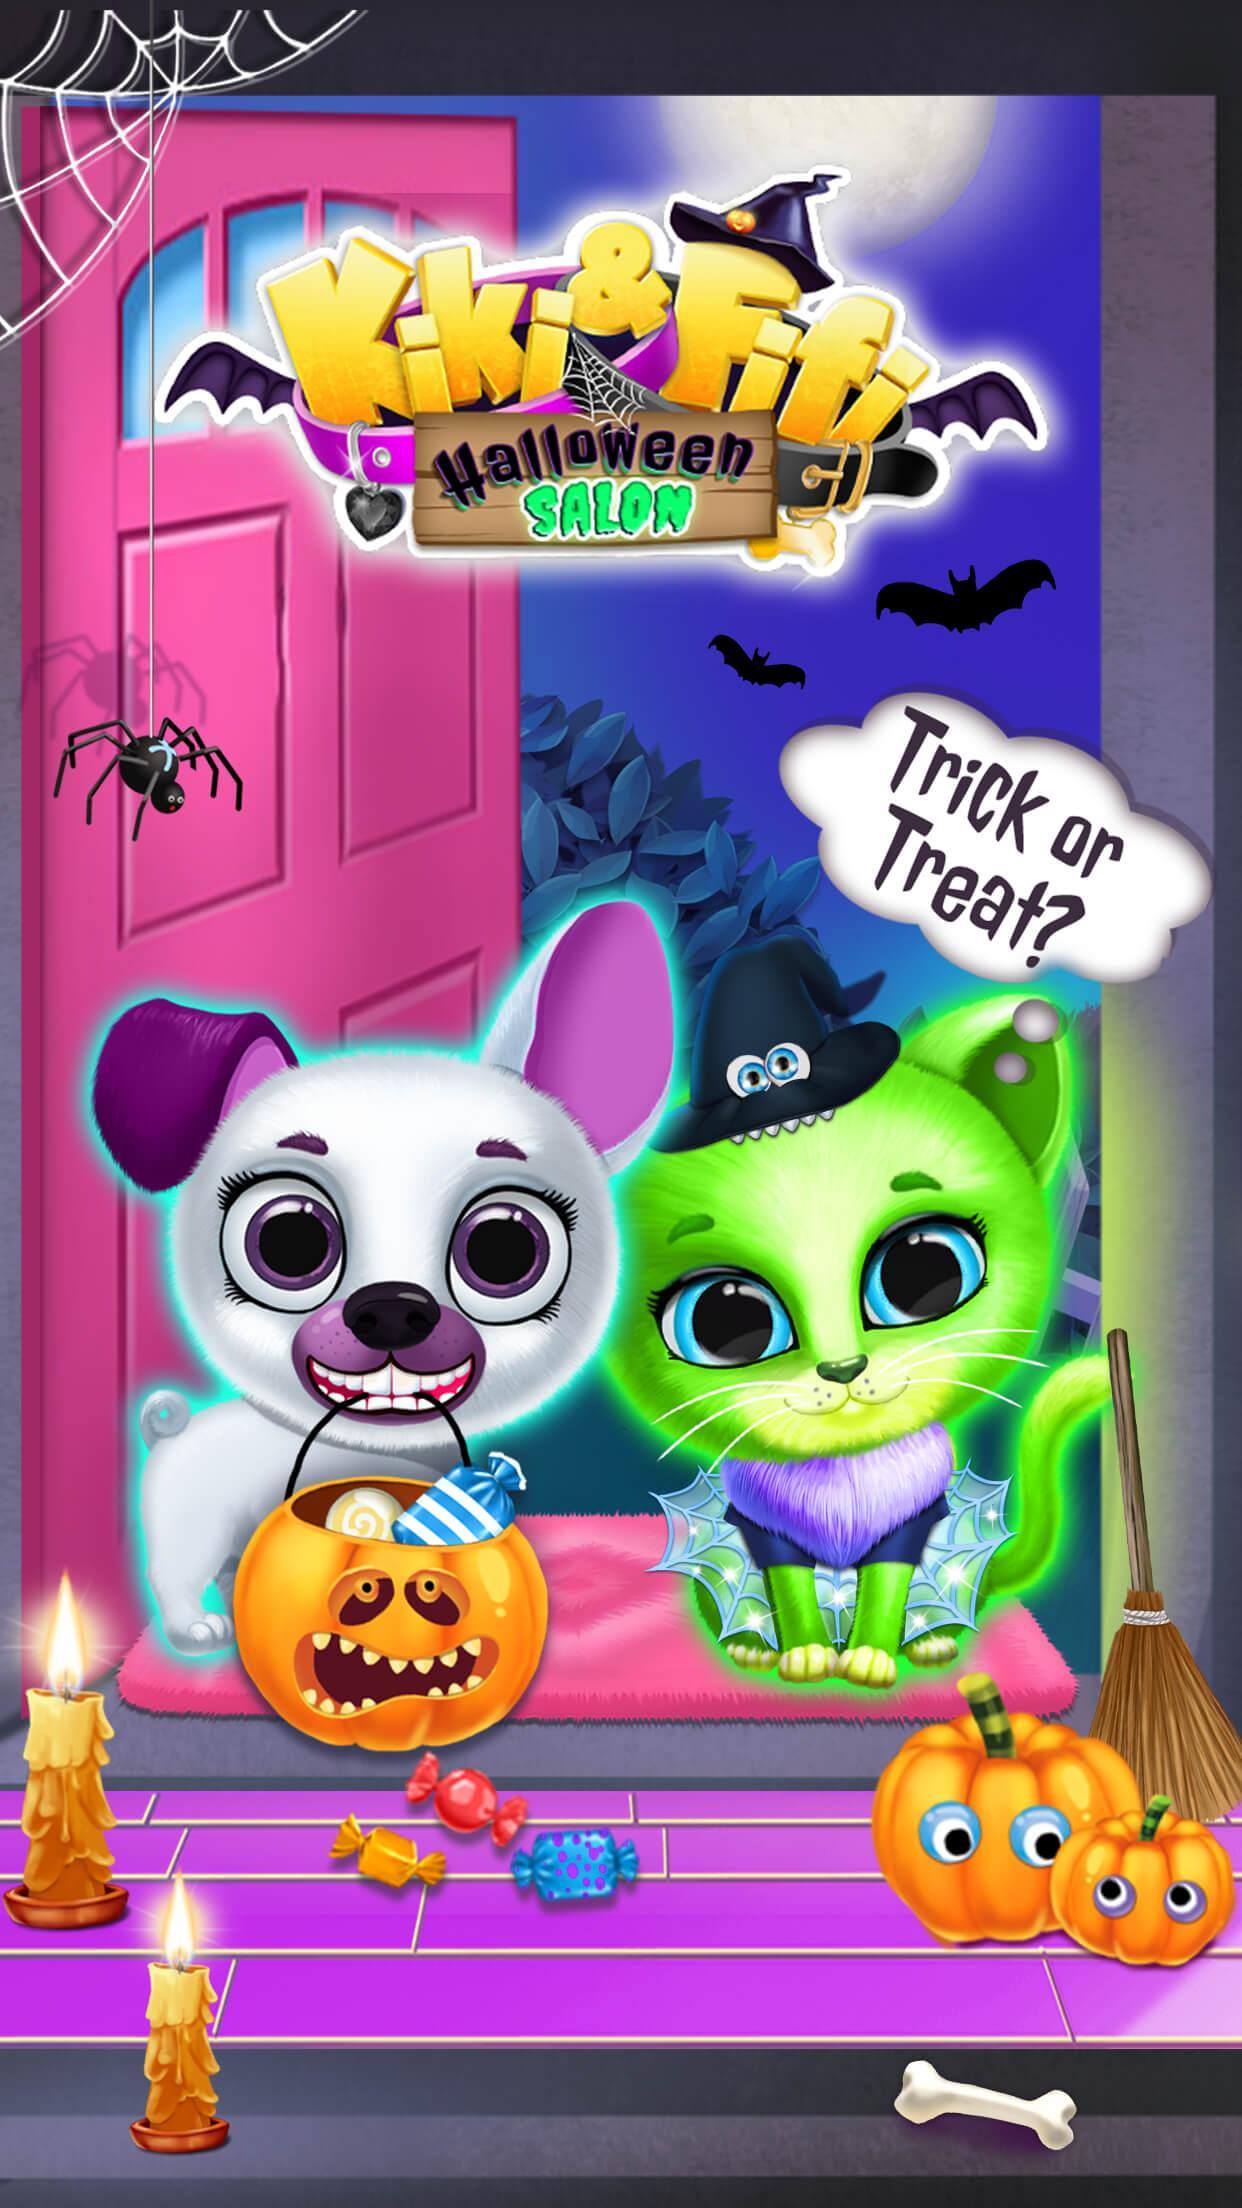 Kiki & Fifi Halloween Salon - Scary Pet Makeover 3.0.26 Screenshot 5